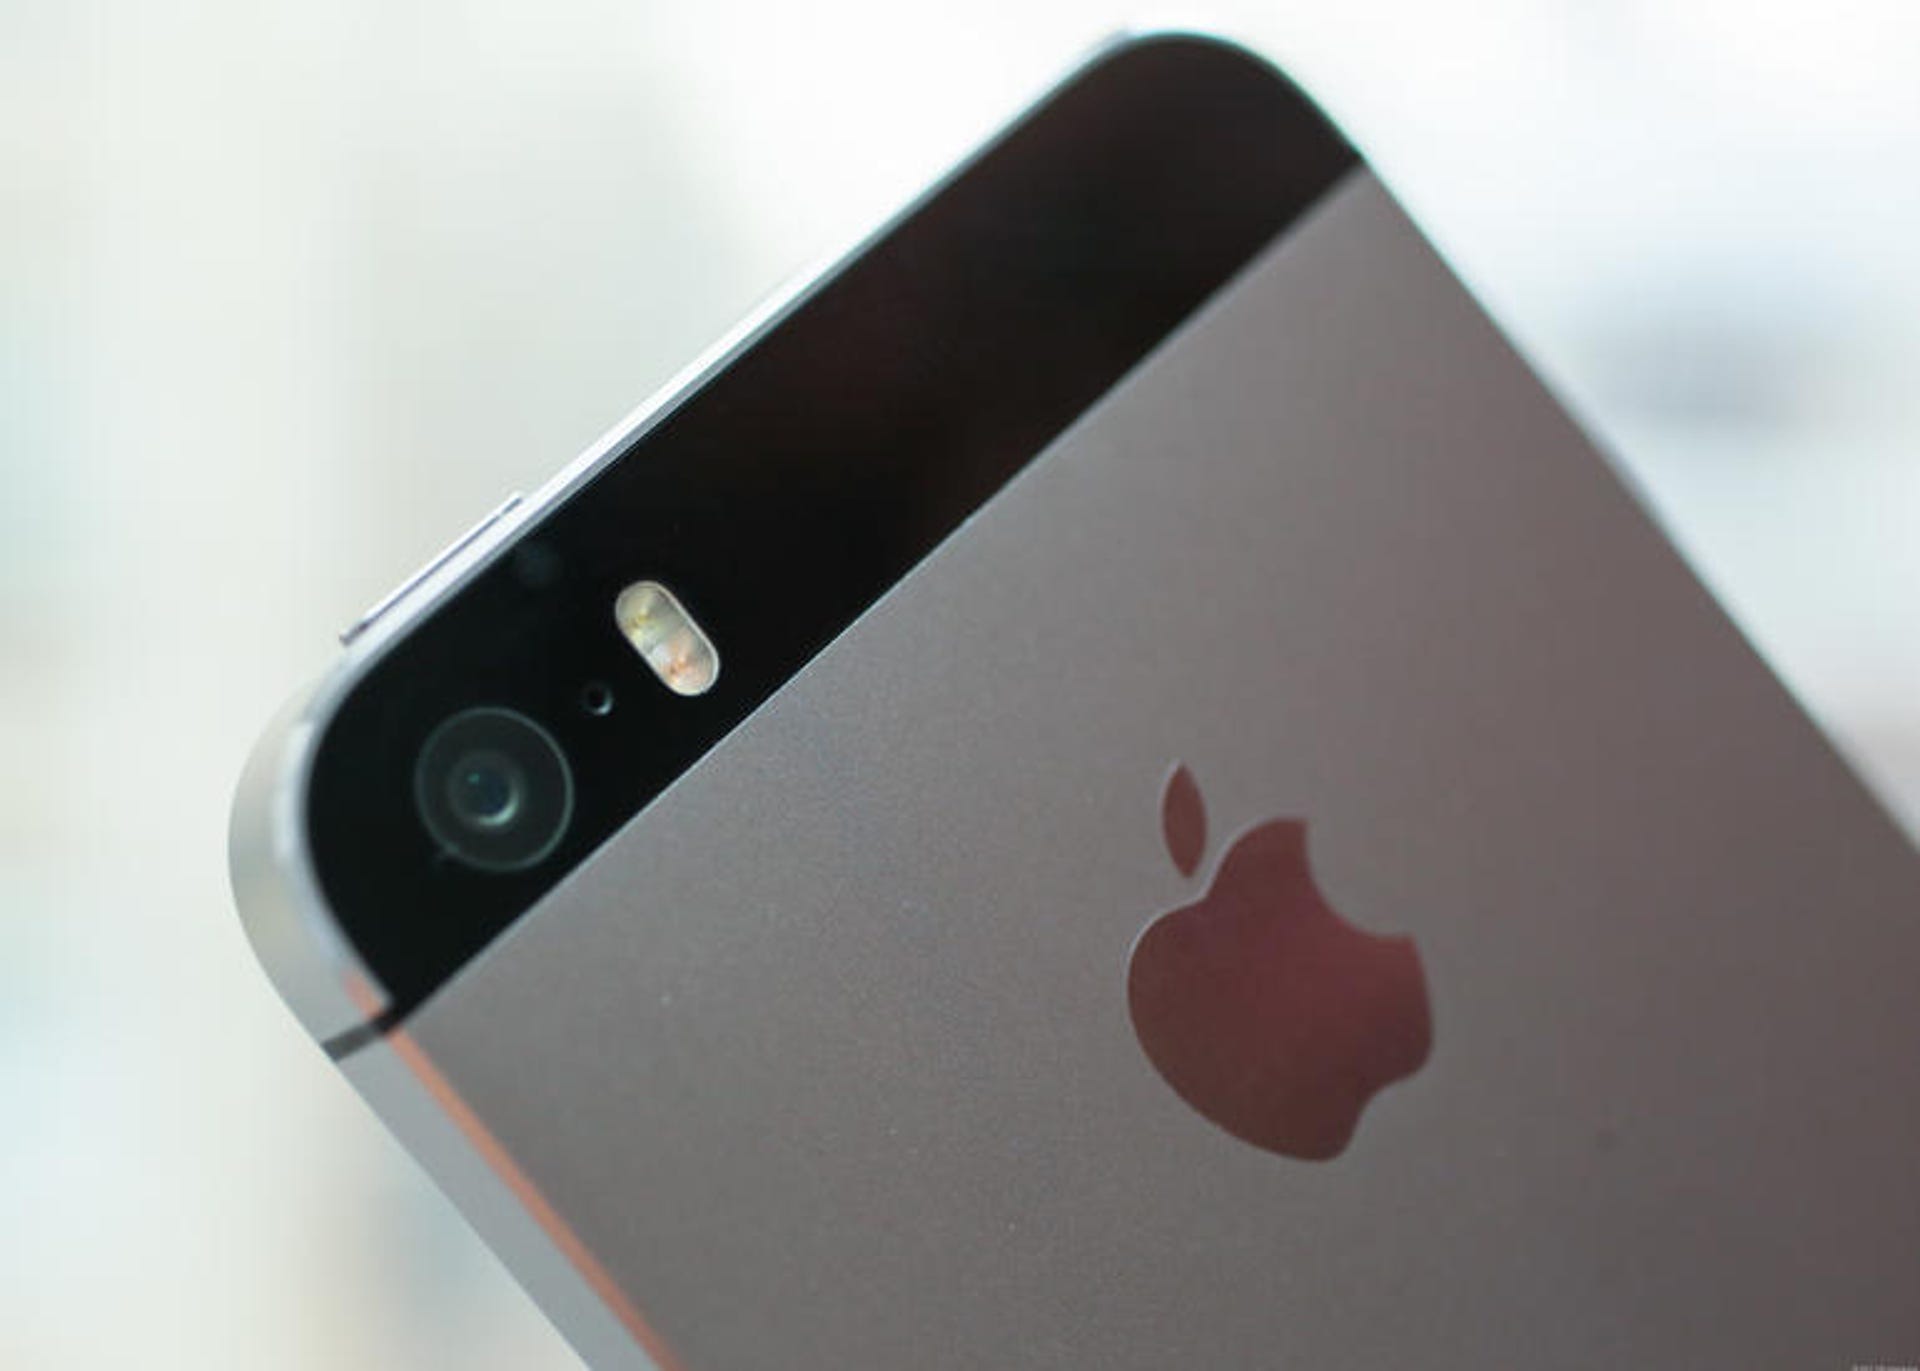 iPhone 8 Plus review: Cutting-edge power in a familiar design - CNET